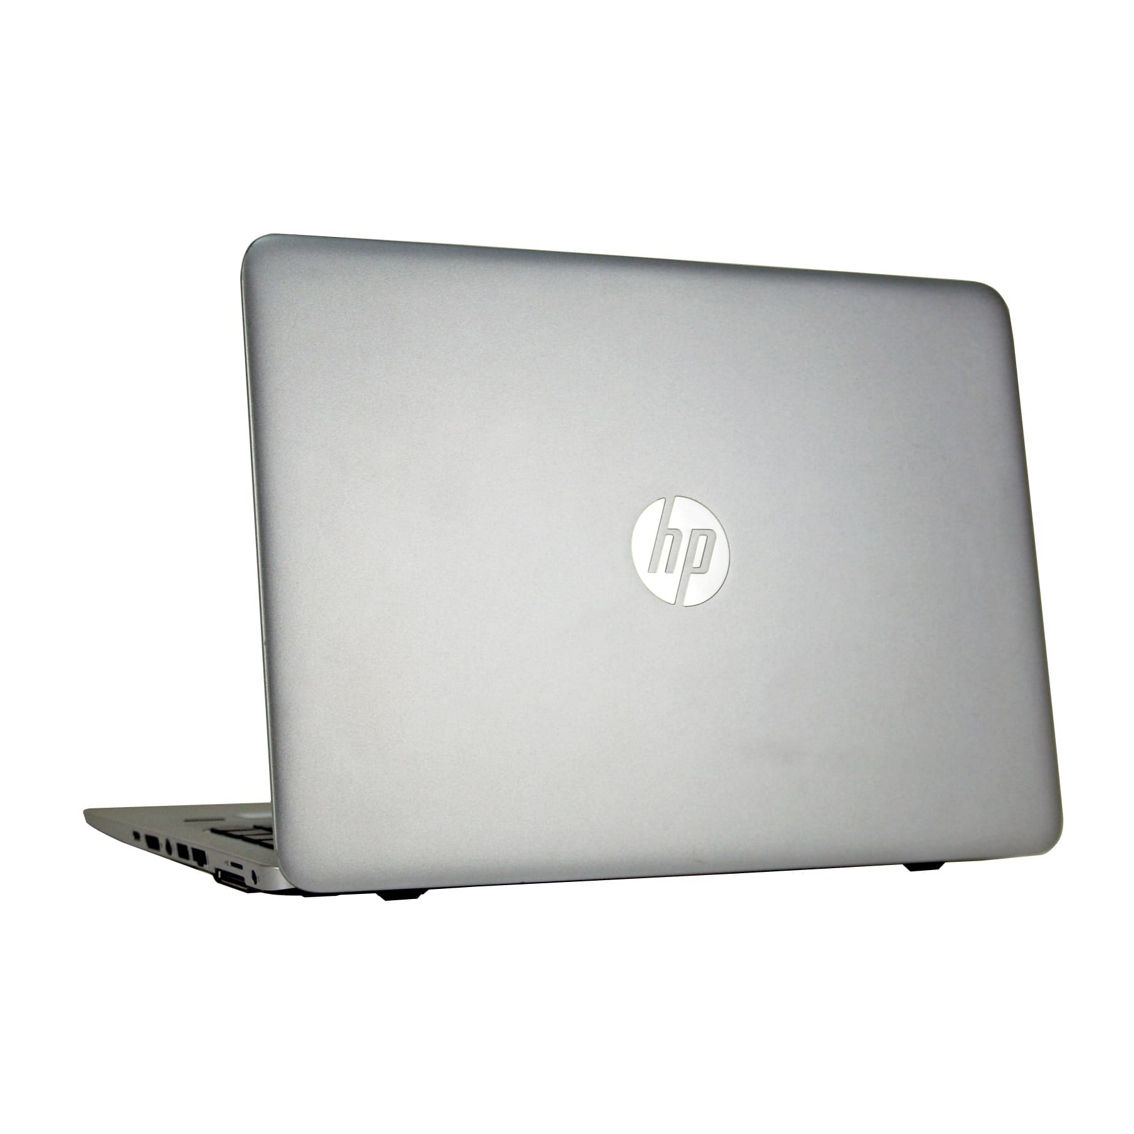 HP 840 G3 Core i5-6300U 2.4GHz 8GB Ram 256GB SSD Laptop (Refurbished) - Image 2 of 4